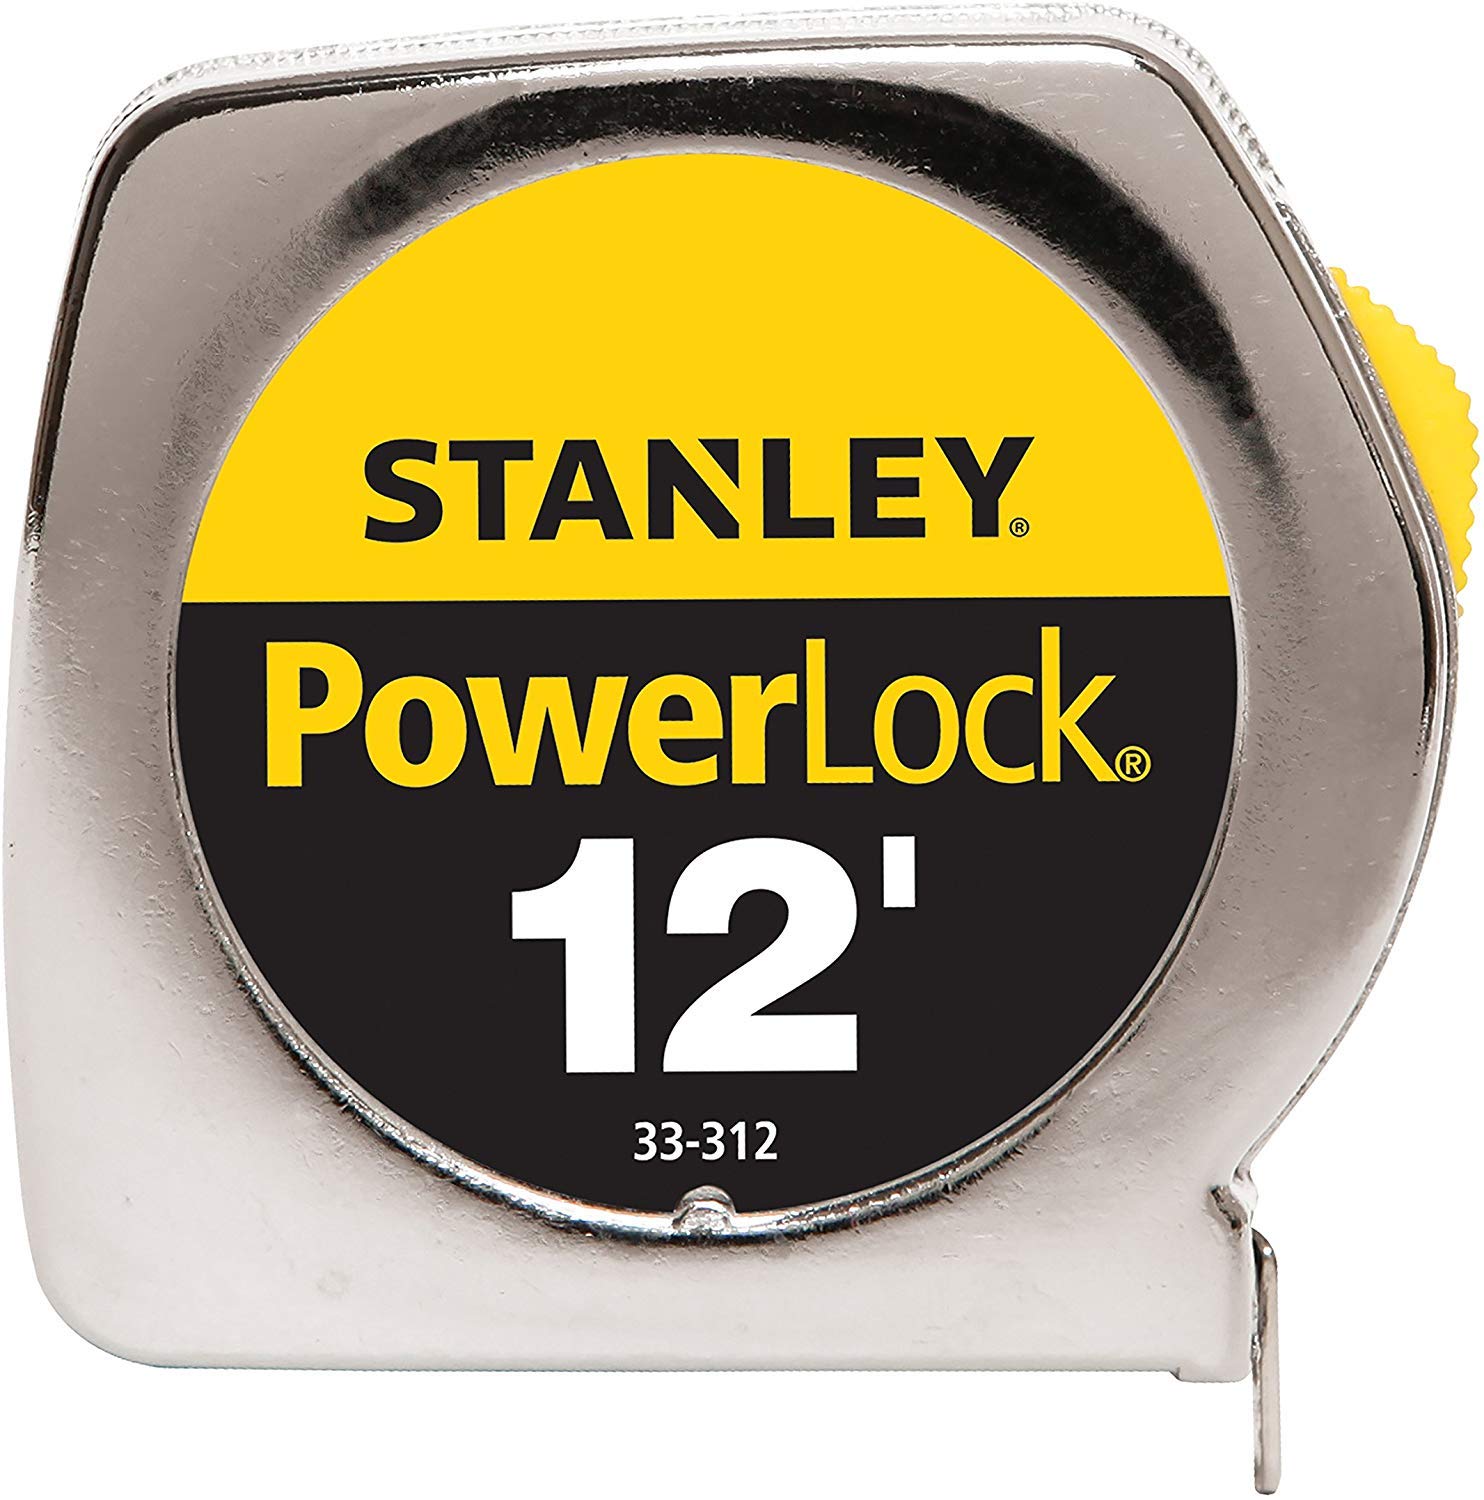 Stanley Hand TOOLS 33-312 3/4 X 12' PowerLock Professional Tape Measure